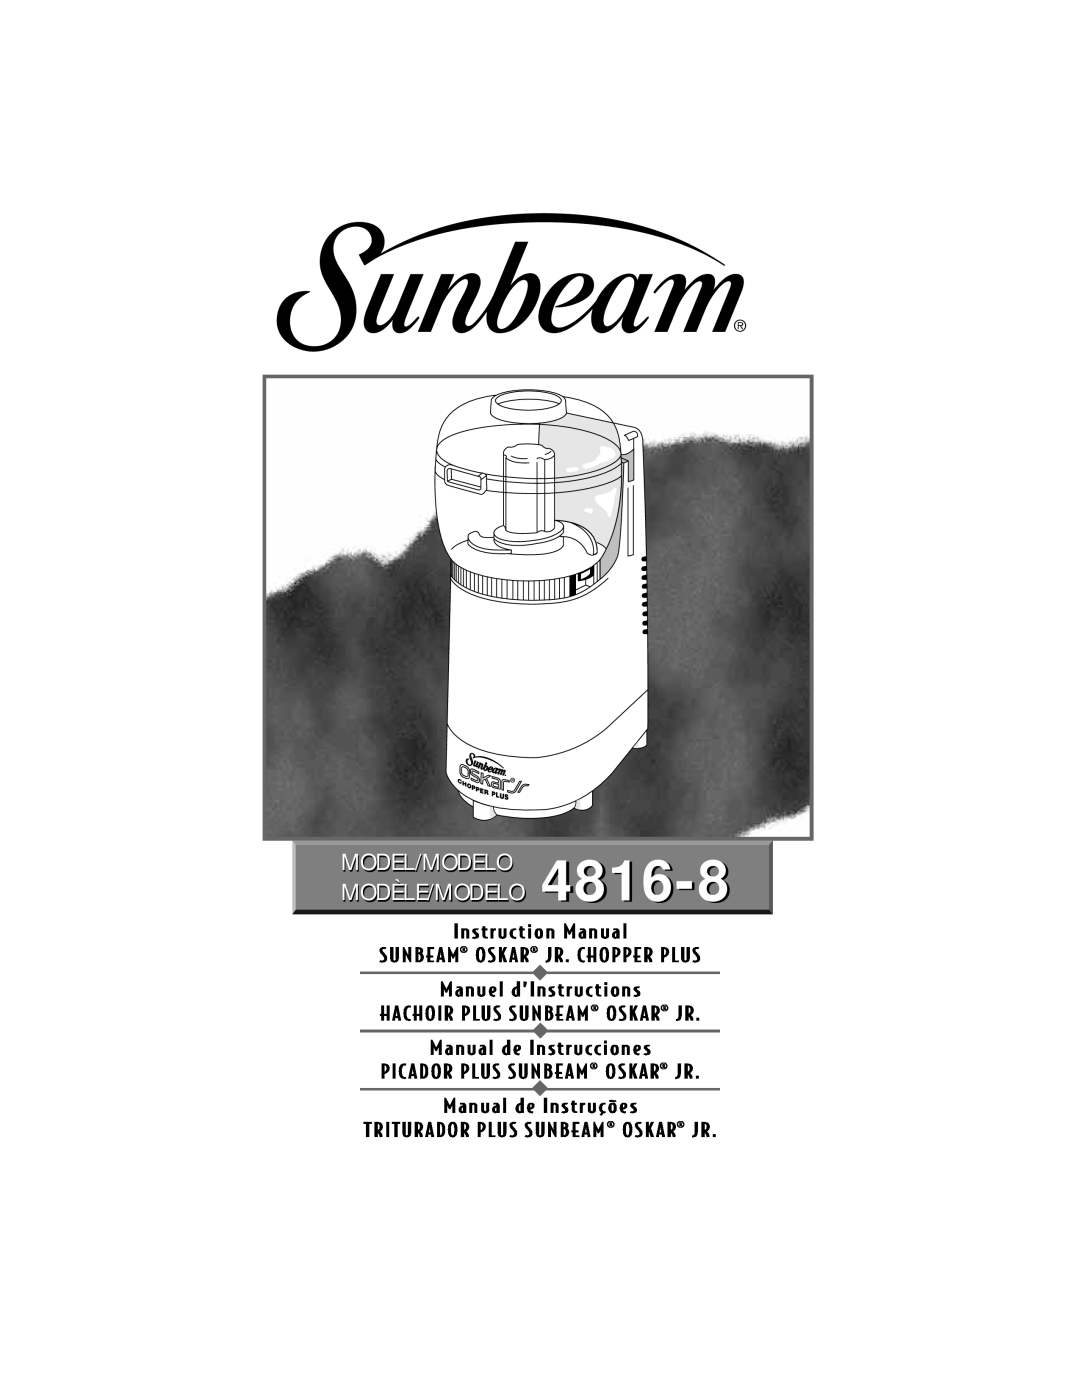 Sunbeam 4816-8 instruction manual Model/Modelo Modèle/Modelo 